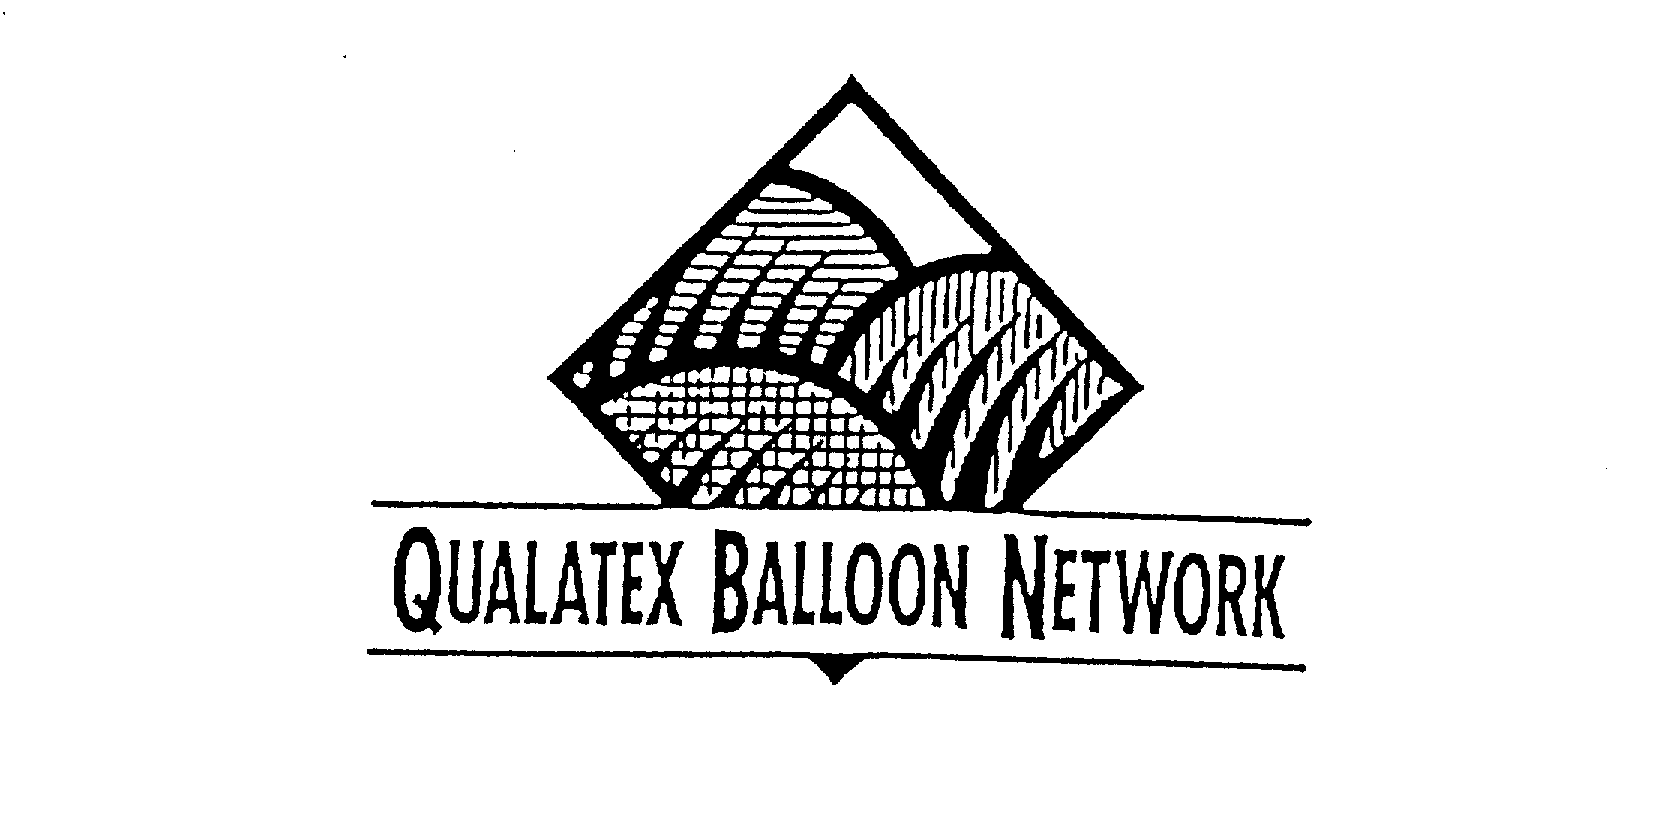  QUALATEX BALLOON NETWORK